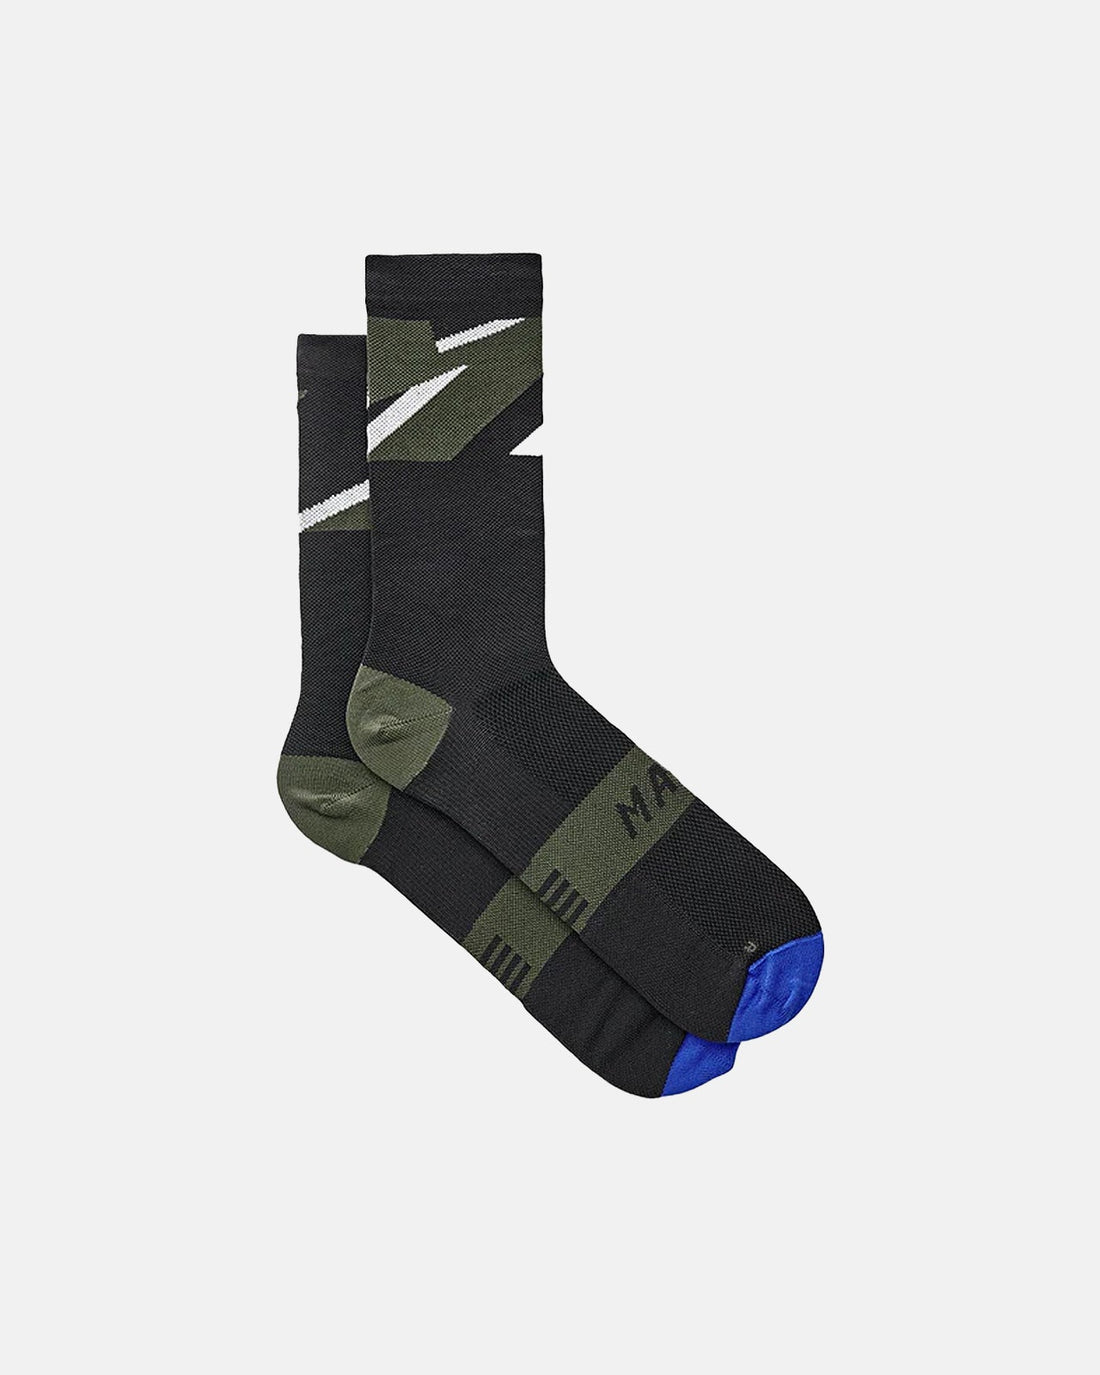 Evolve 3D Sock - Black/Olive - MAAP